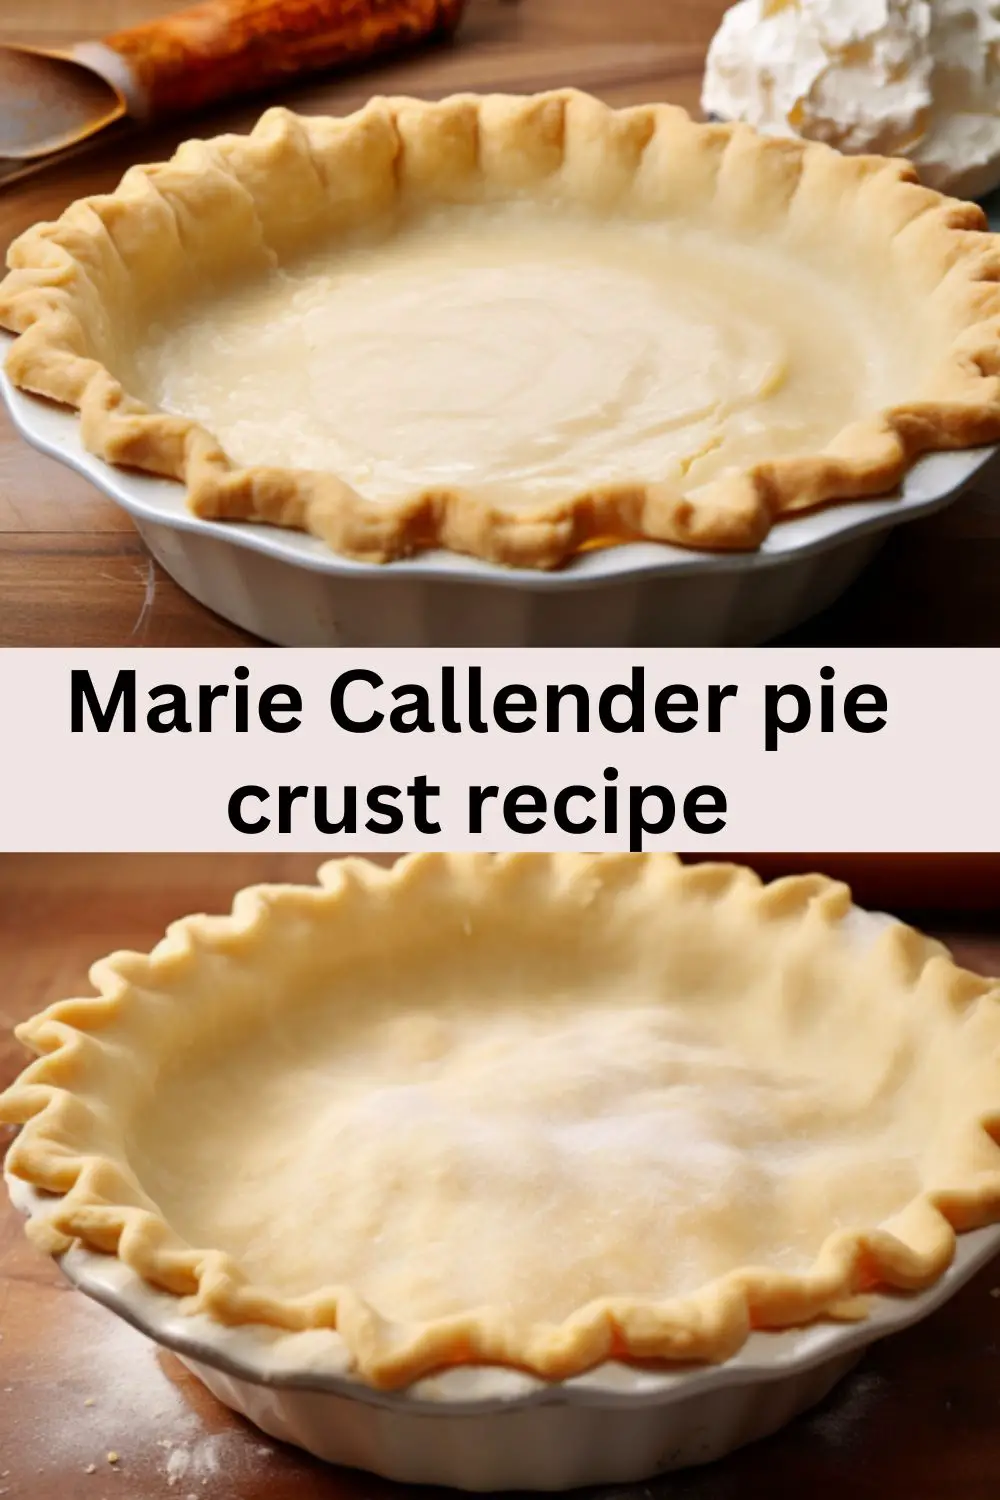 Best Marie Callender Pie Crust Recipe